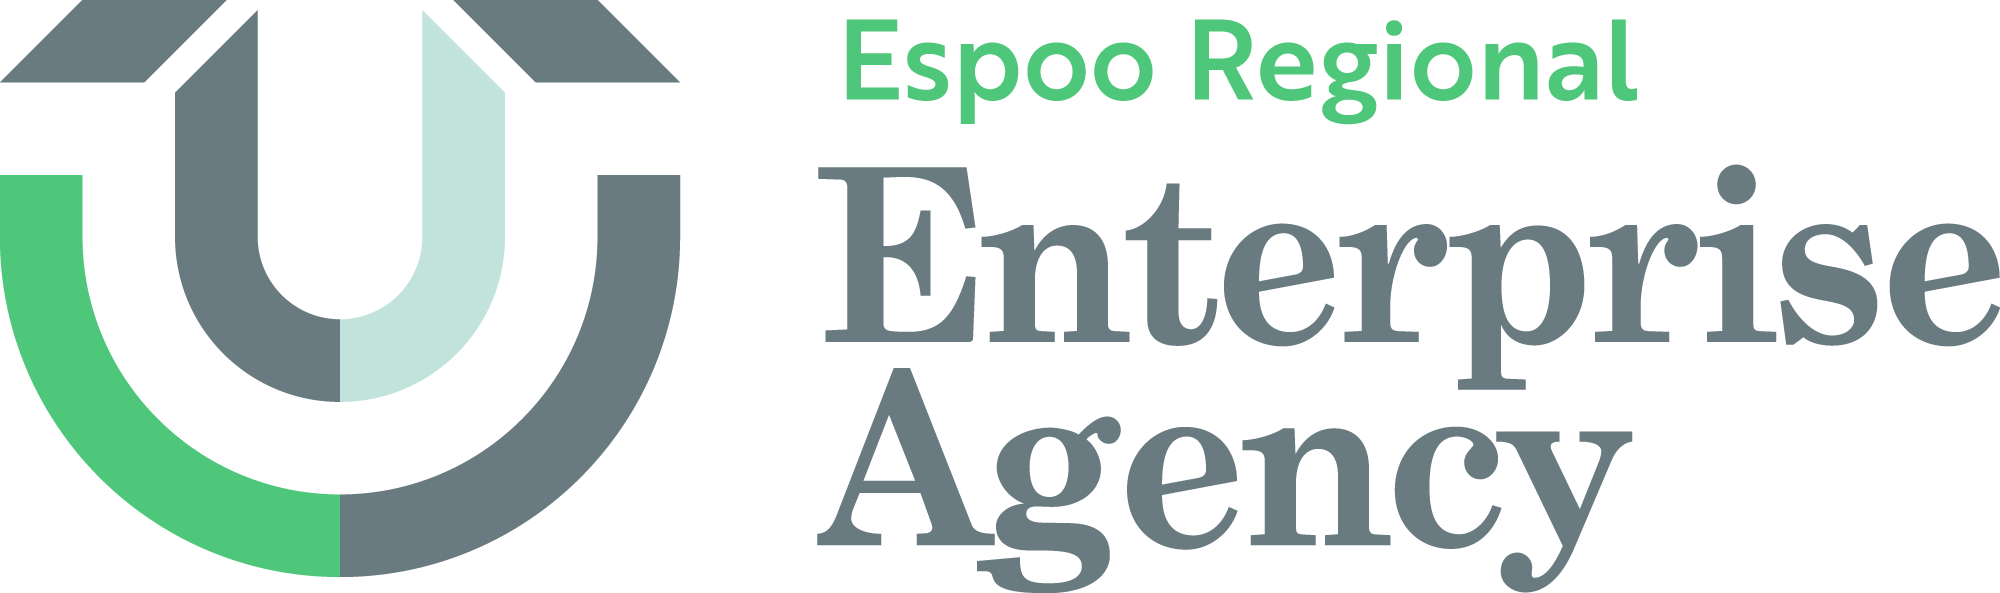 Espoo Region Enterprise Agency logo